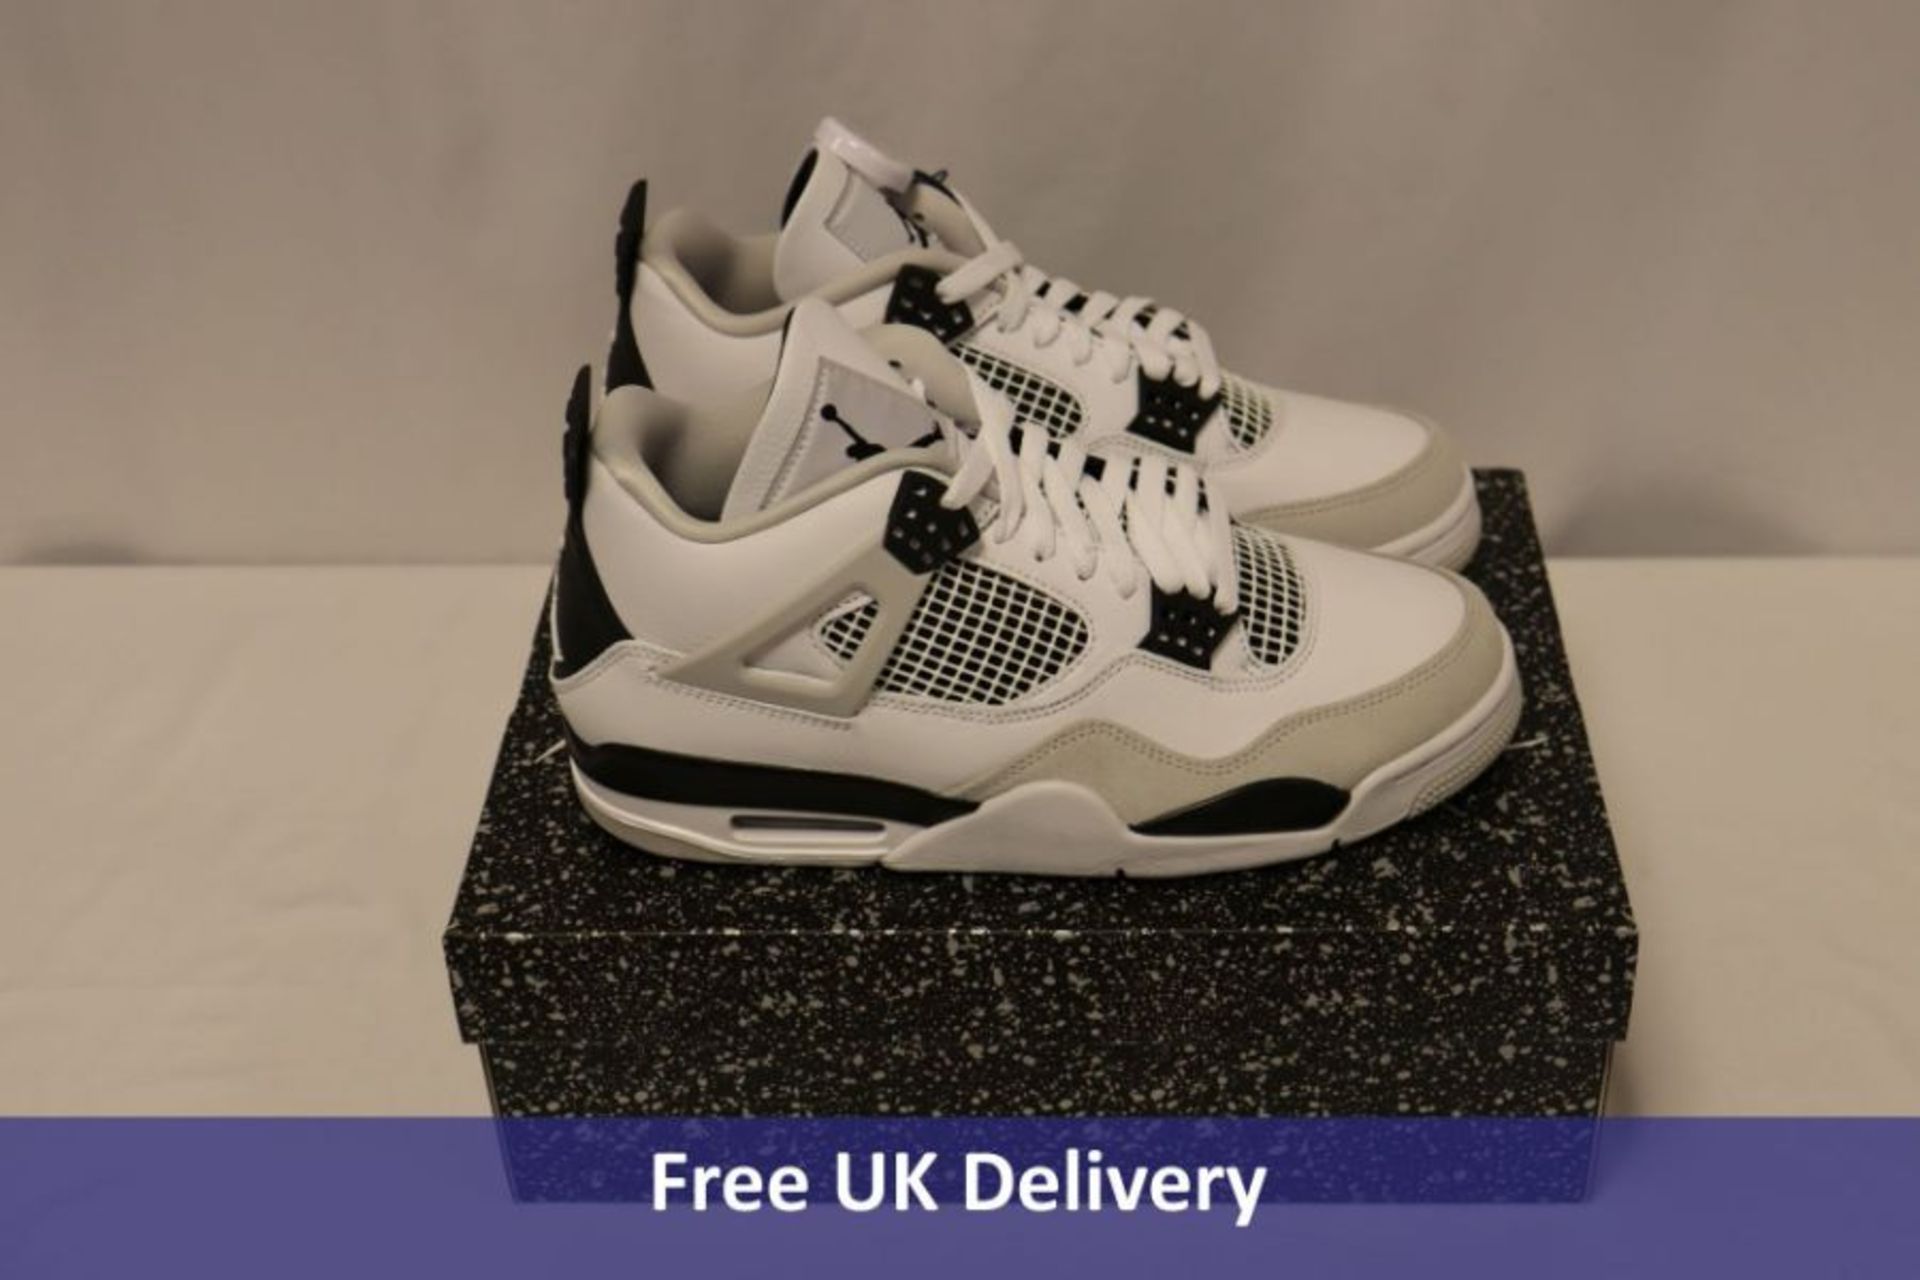 Nike Air Jordan 4 Retro, White/Black/Grey, UK 8